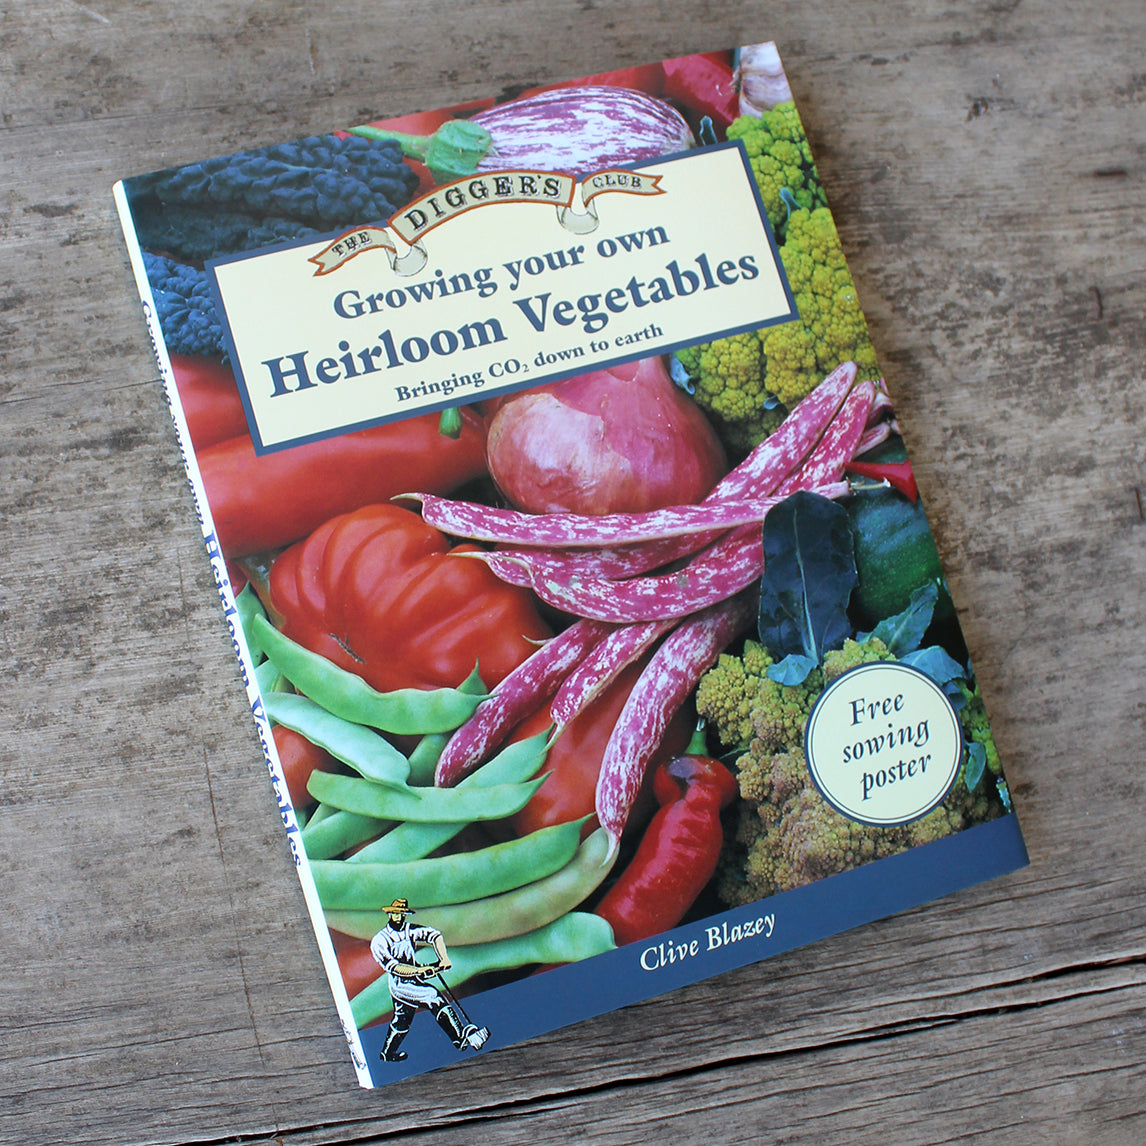 Growing your own Heirloom Vegetables